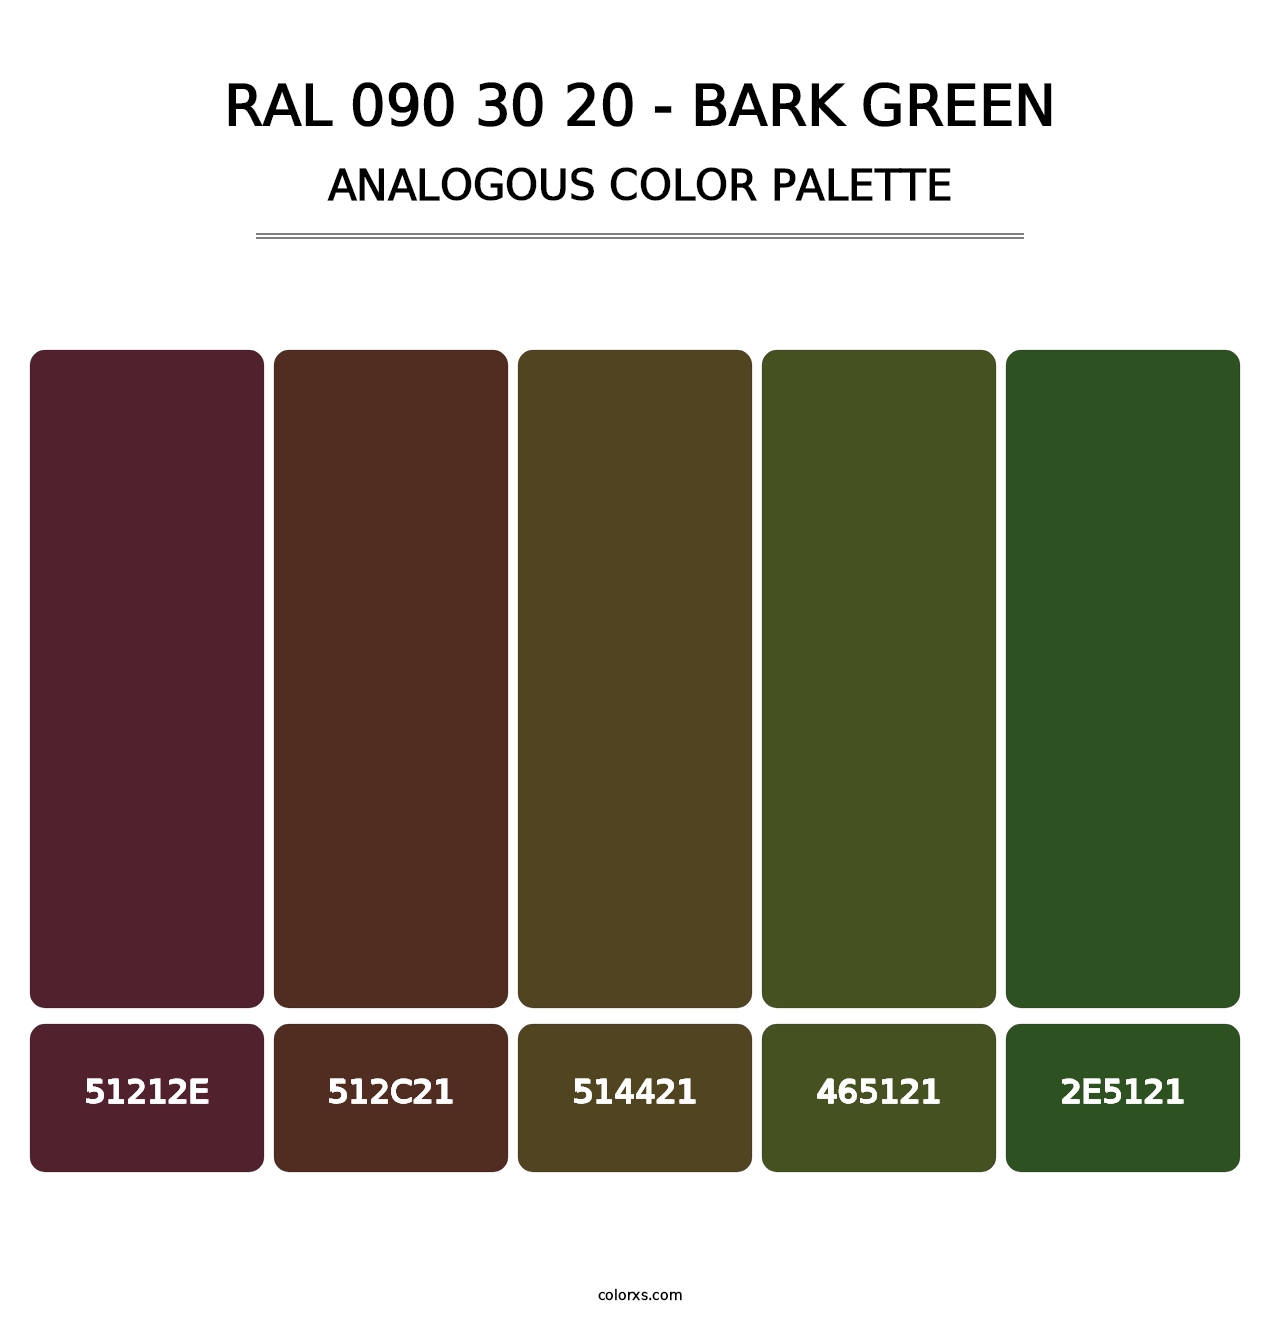 RAL 090 30 20 - Bark Green - Analogous Color Palette